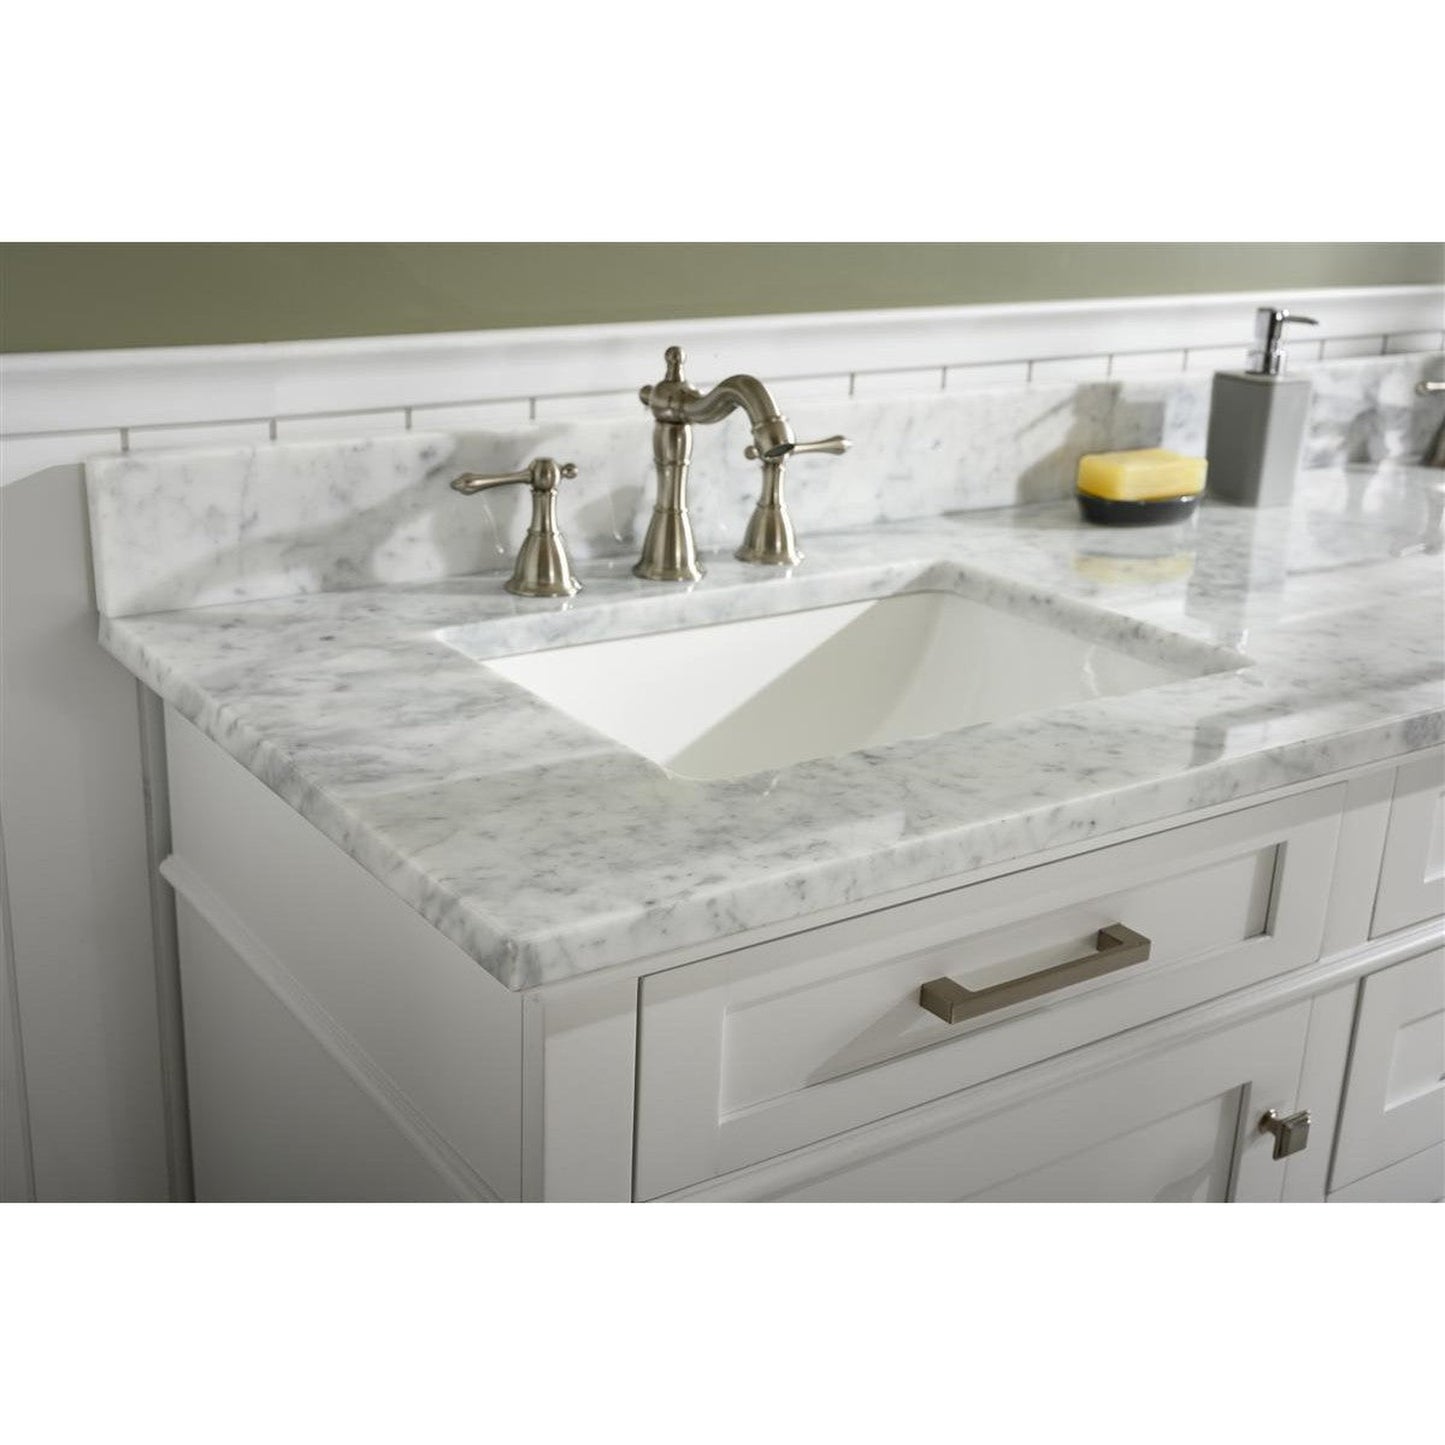 Legion Furniture WLF2272 72" White Freestanding Vanity With White Carrara Quartz Top and Double White Ceramic Sink